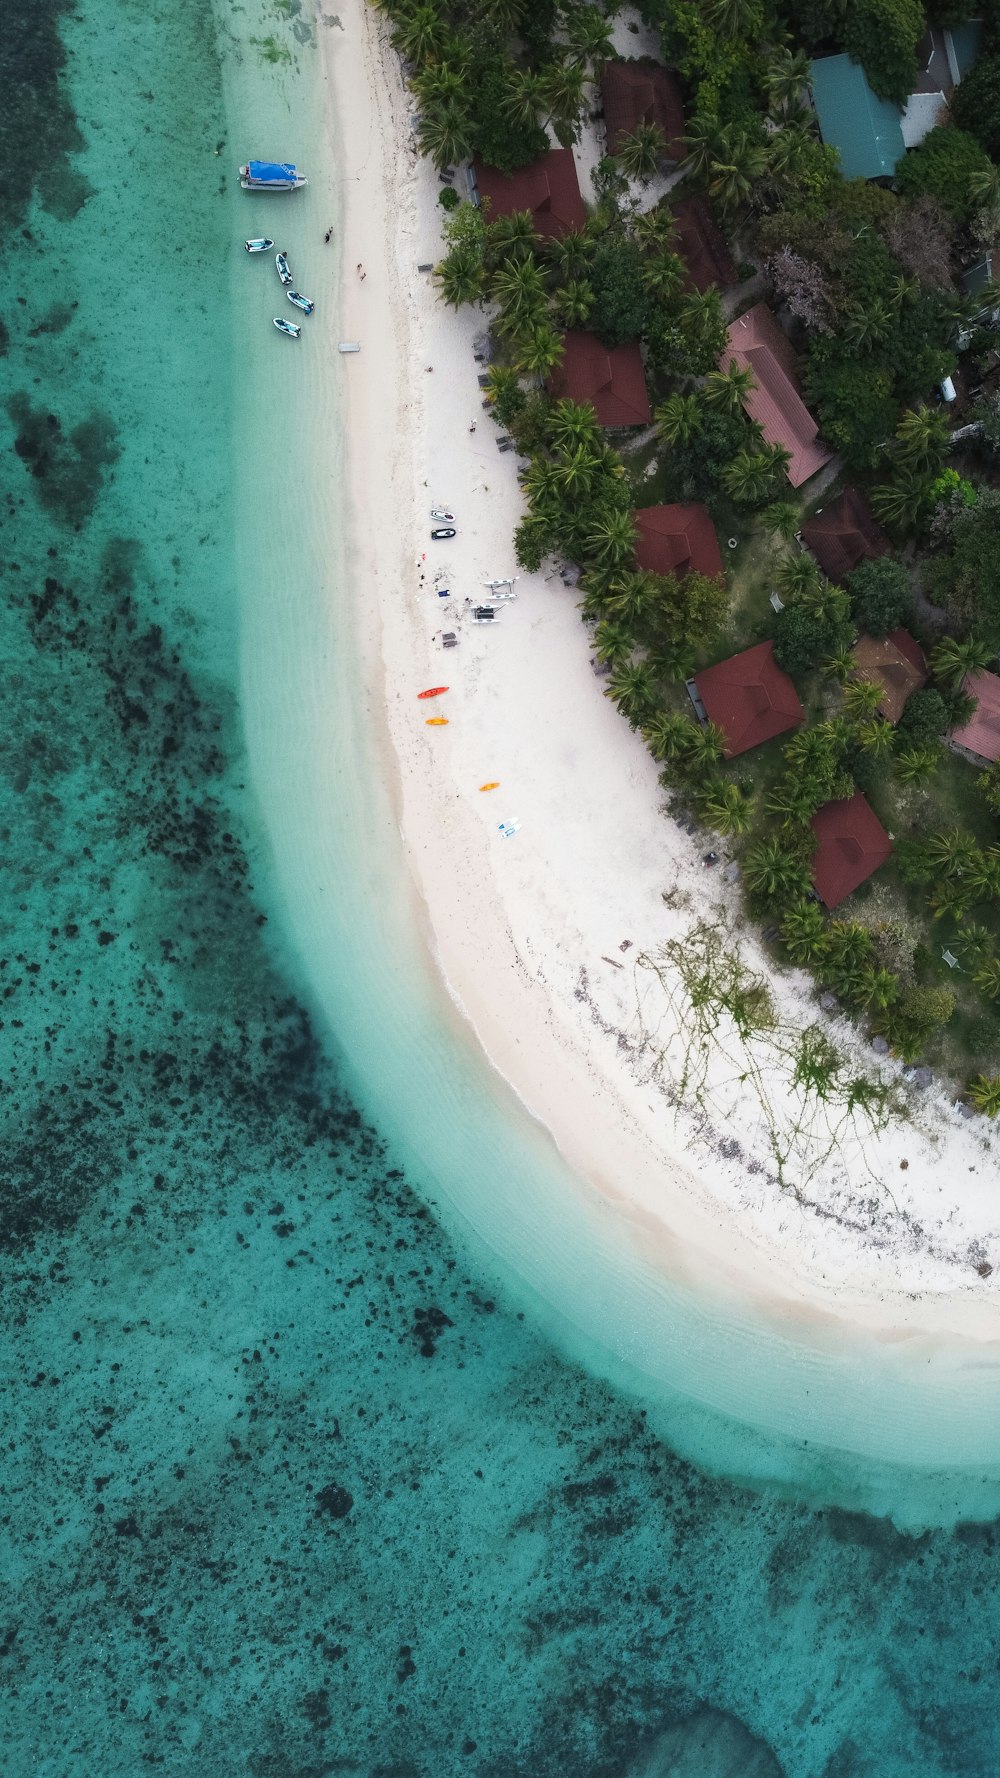 an aerial view of a tropical island with a sandy beach